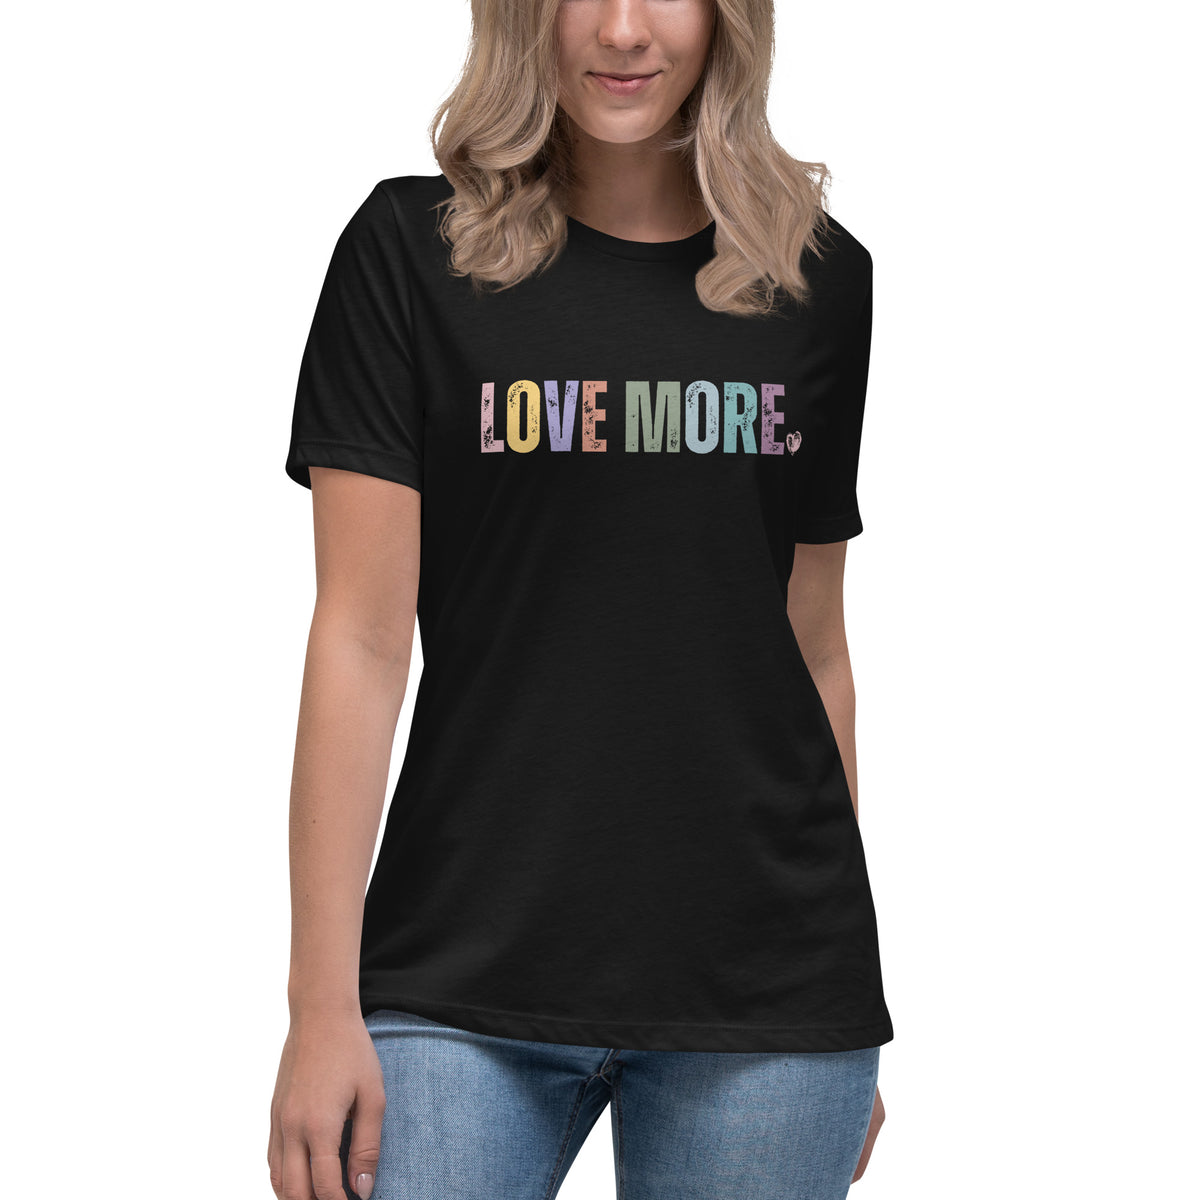 LOVE MORE Women's Relaxed T-Shirt